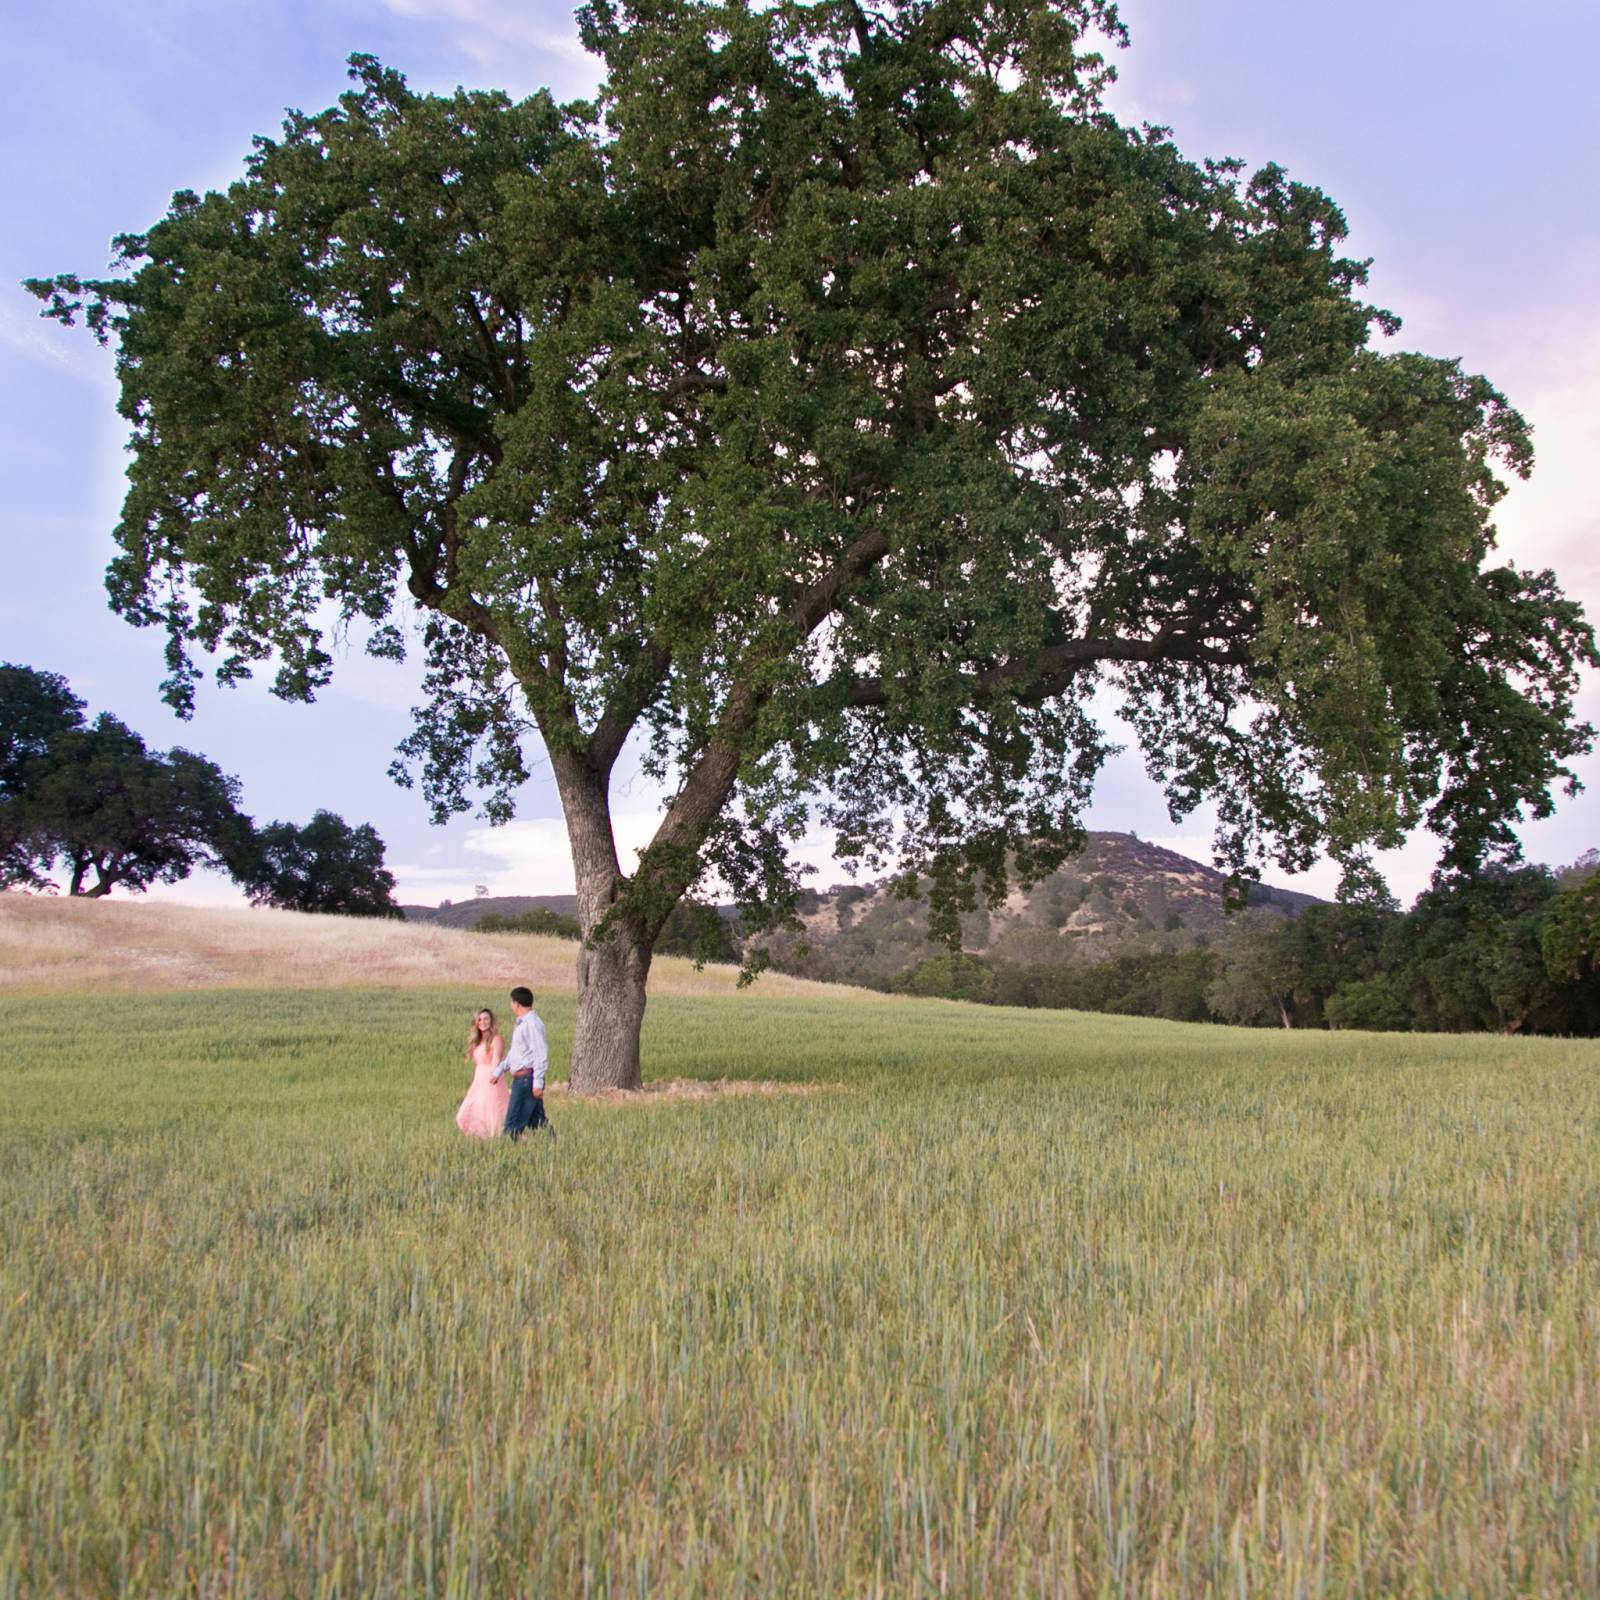 Wedding Shoot Under Oak Tree During Sunset | The Wedding Standard